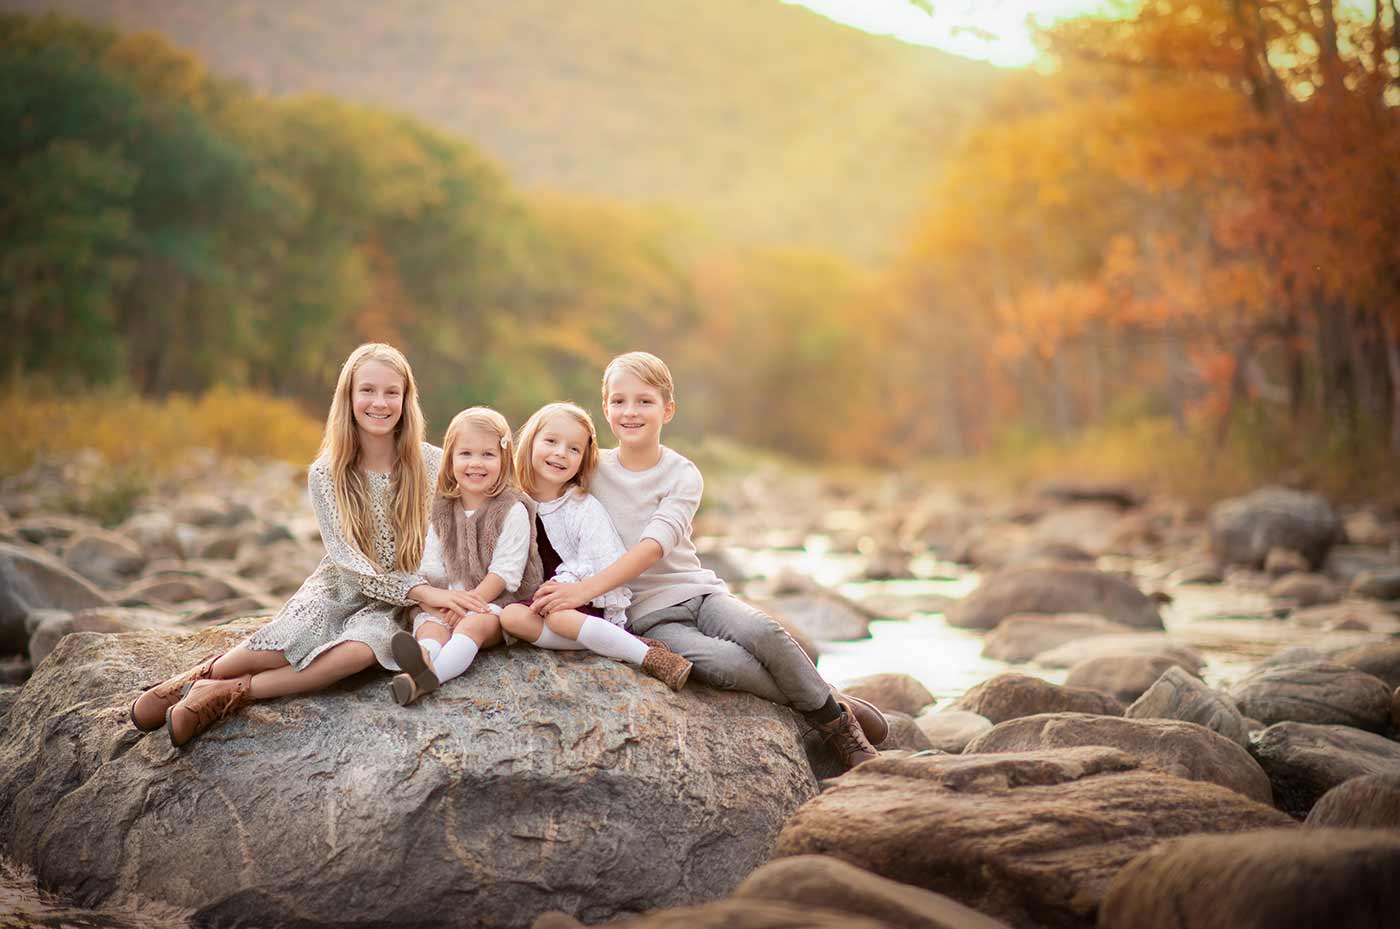 Stunning portrait of children set amidst Vermont foliage near a river